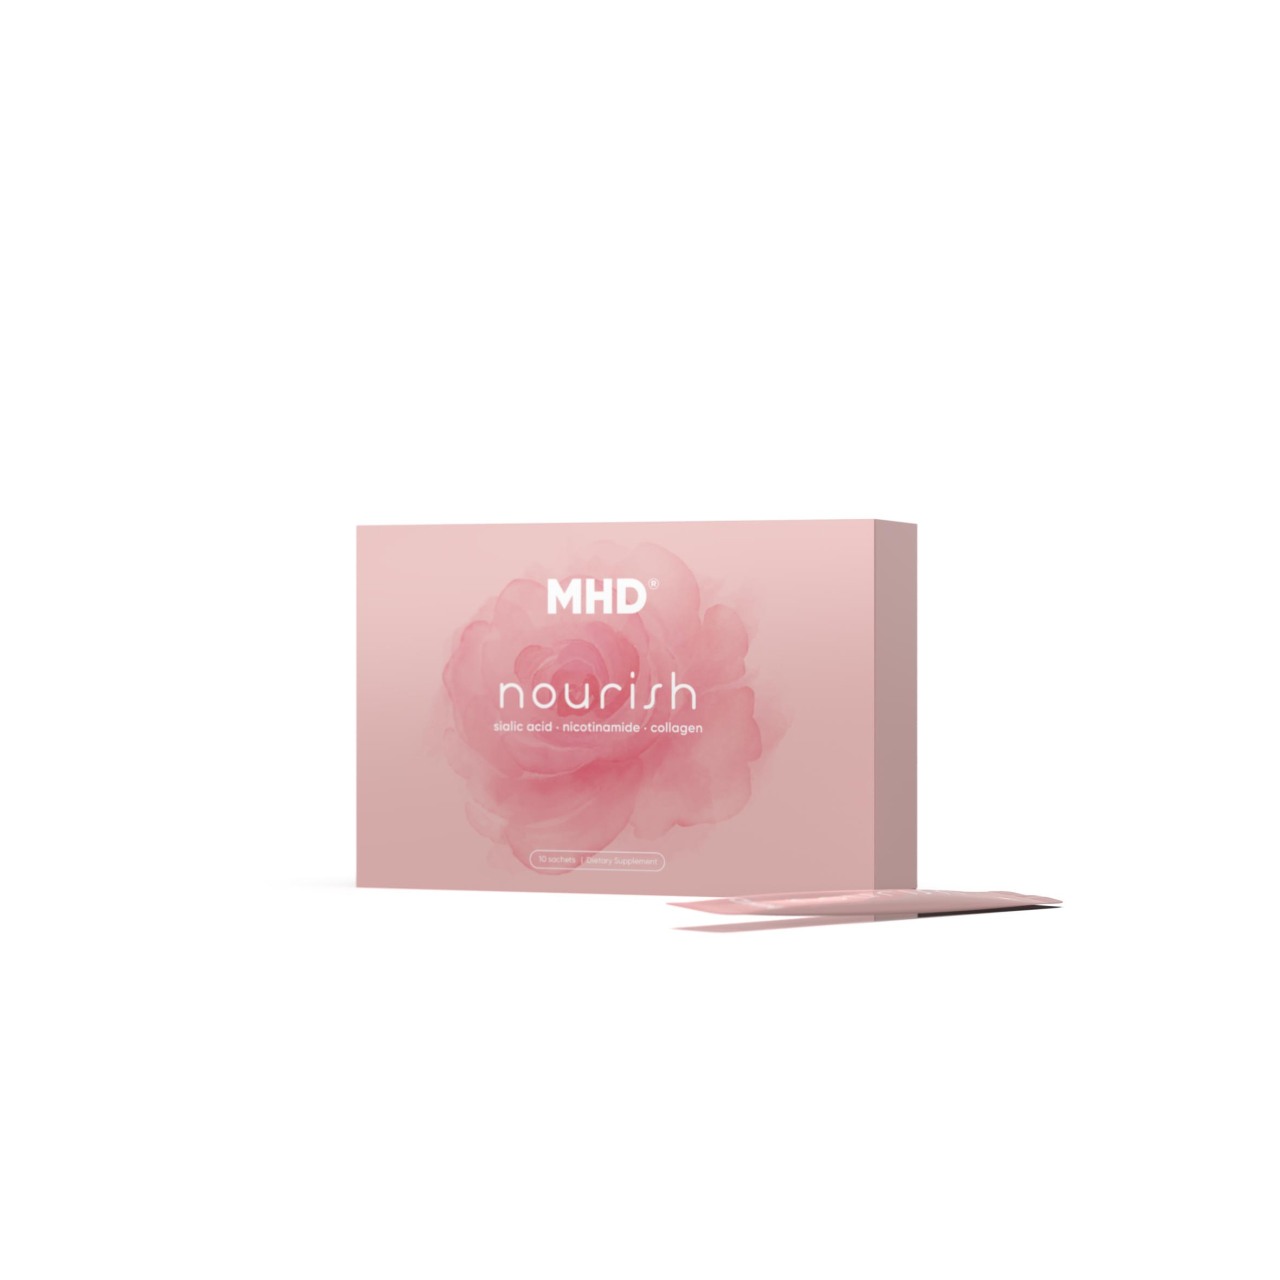 MHD® NOURISH 口服烟酰胺小白饮胶原蛋白粉